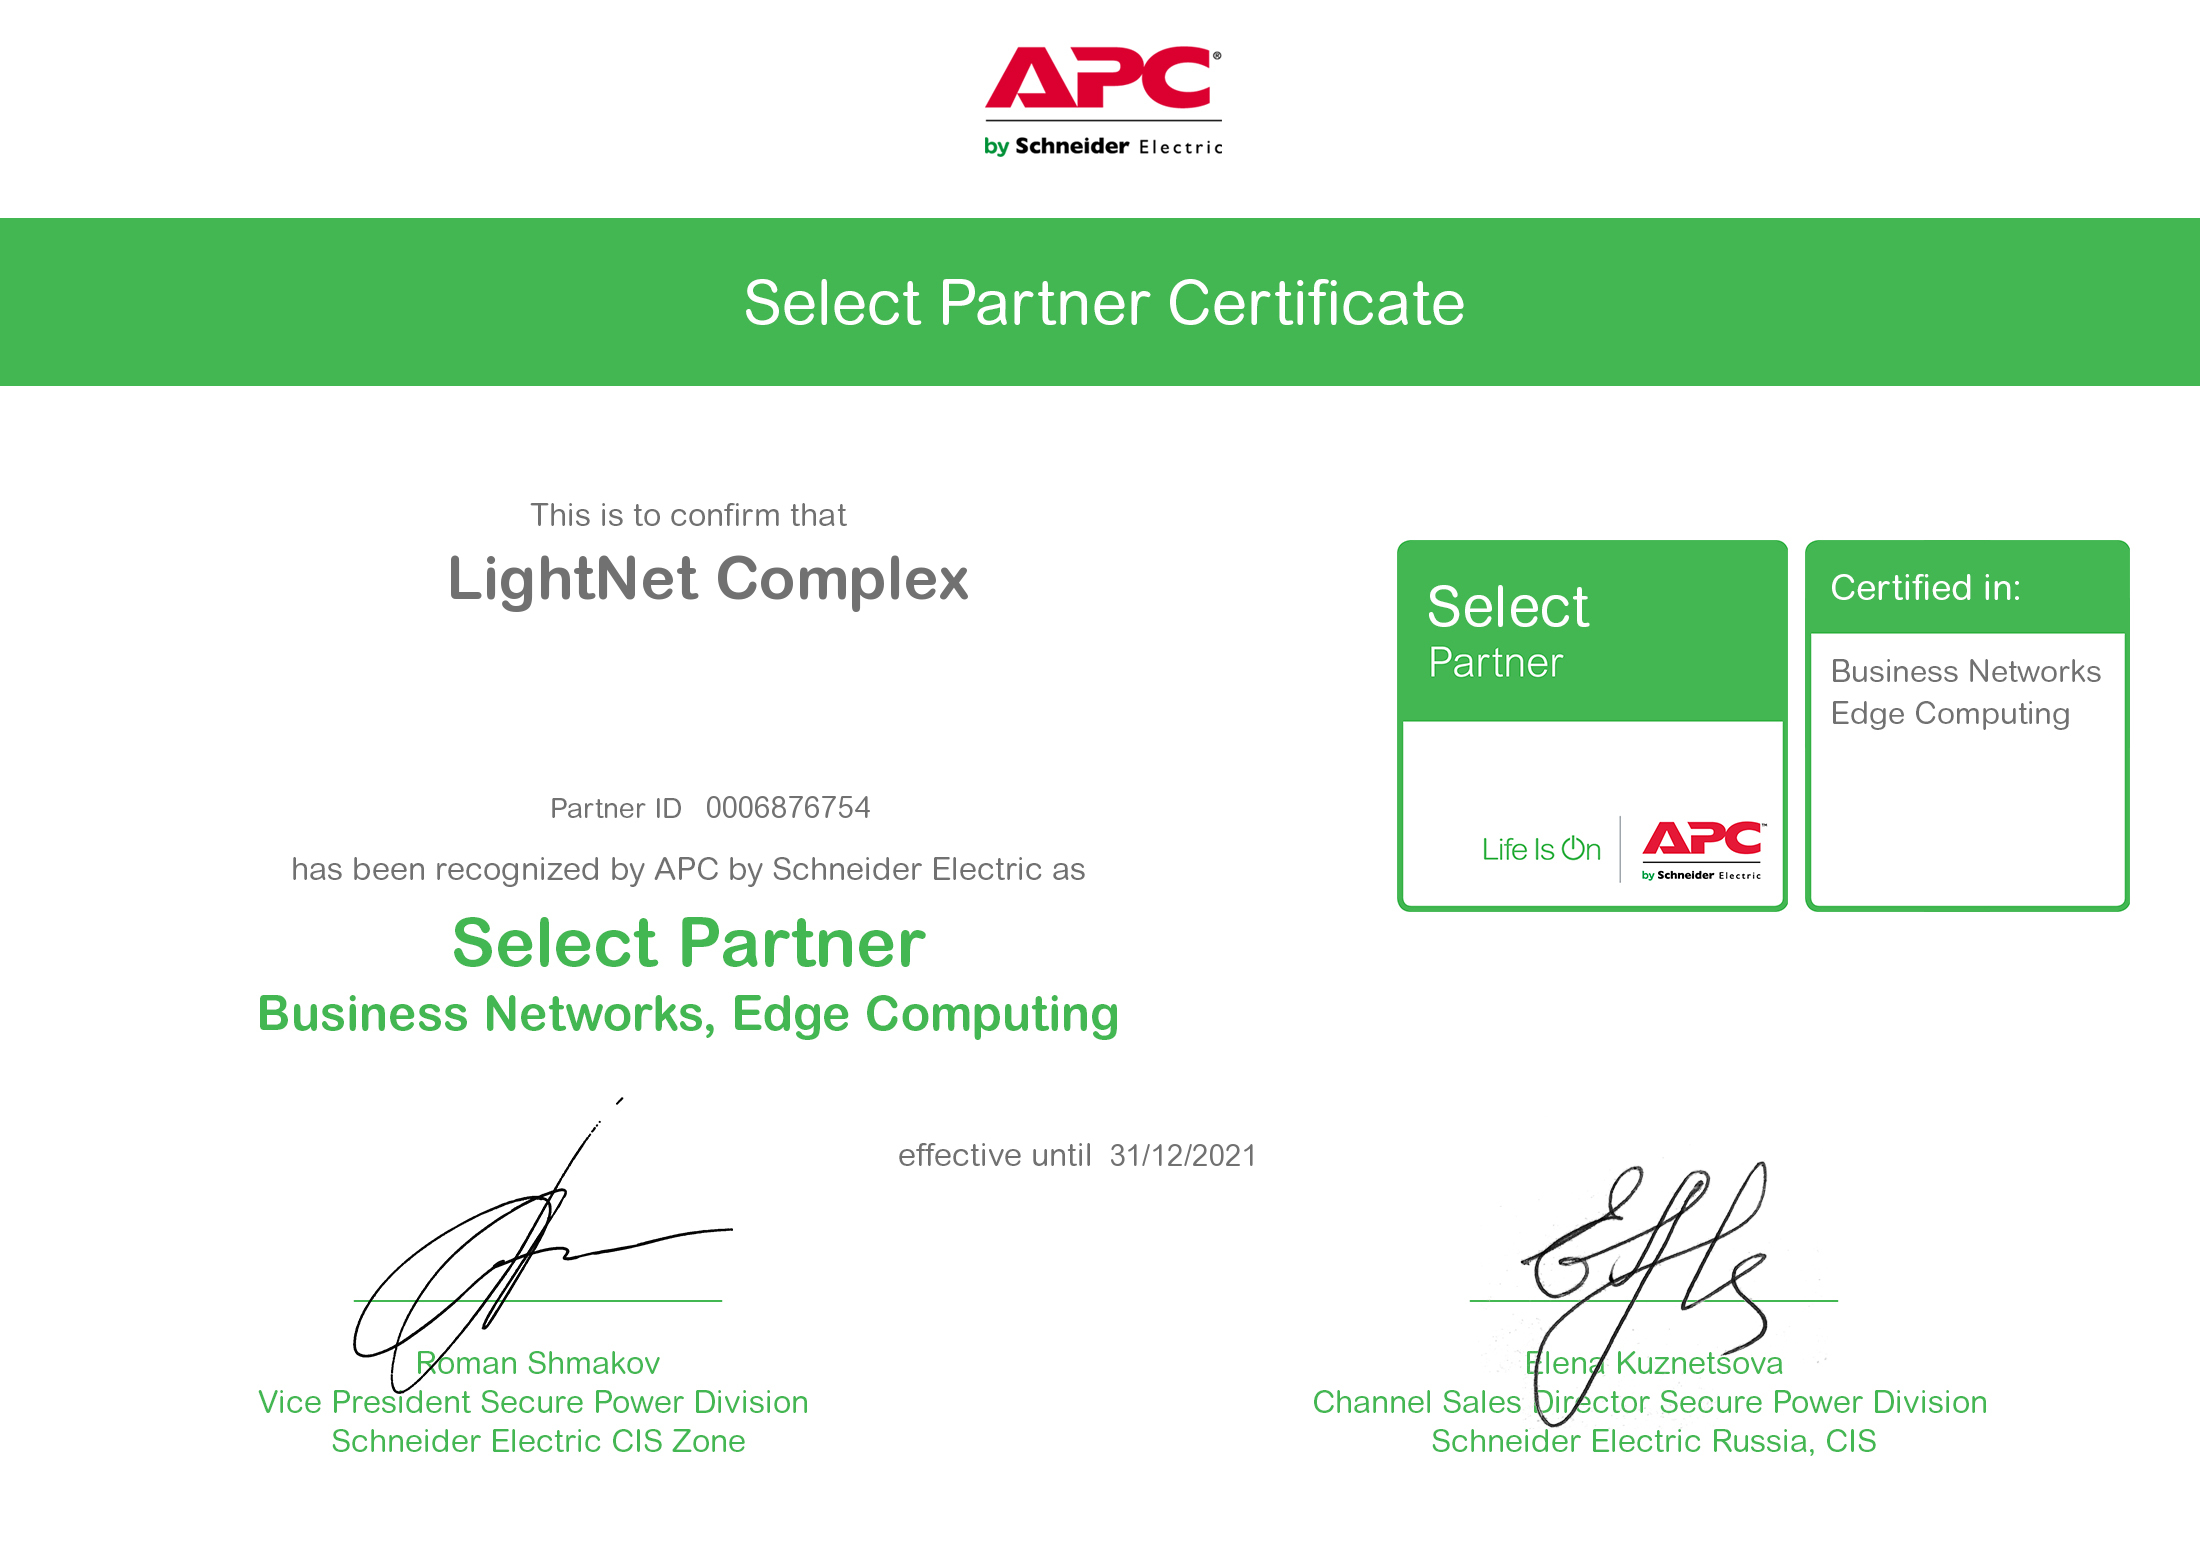 APC - Select Partner